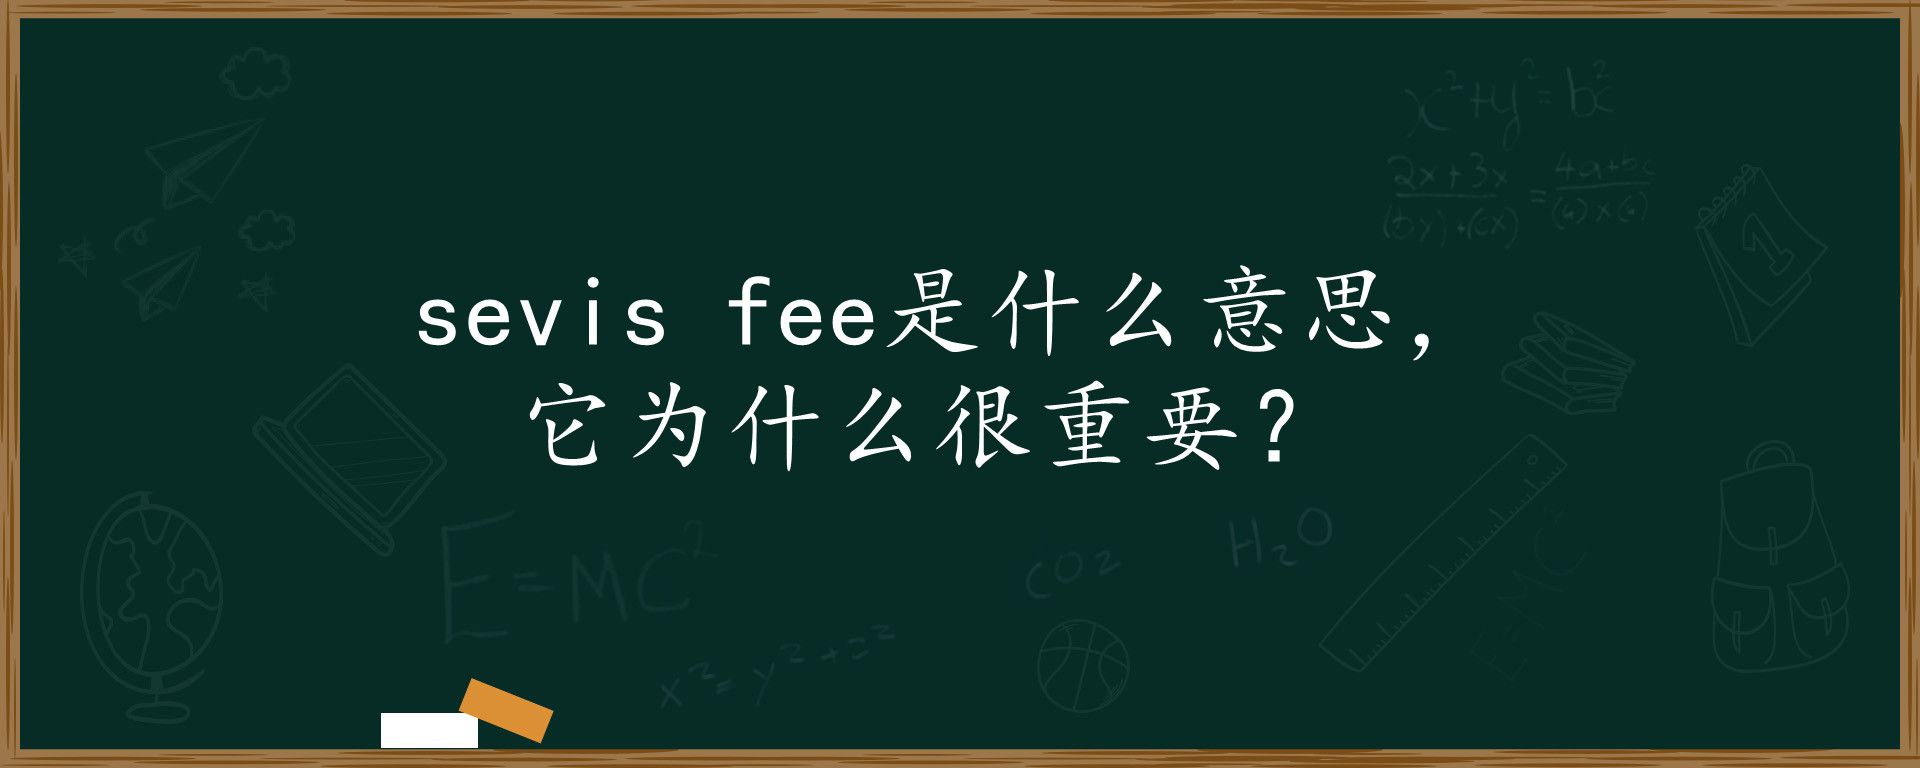 sevis fee是什么意思，它为什么很重要？